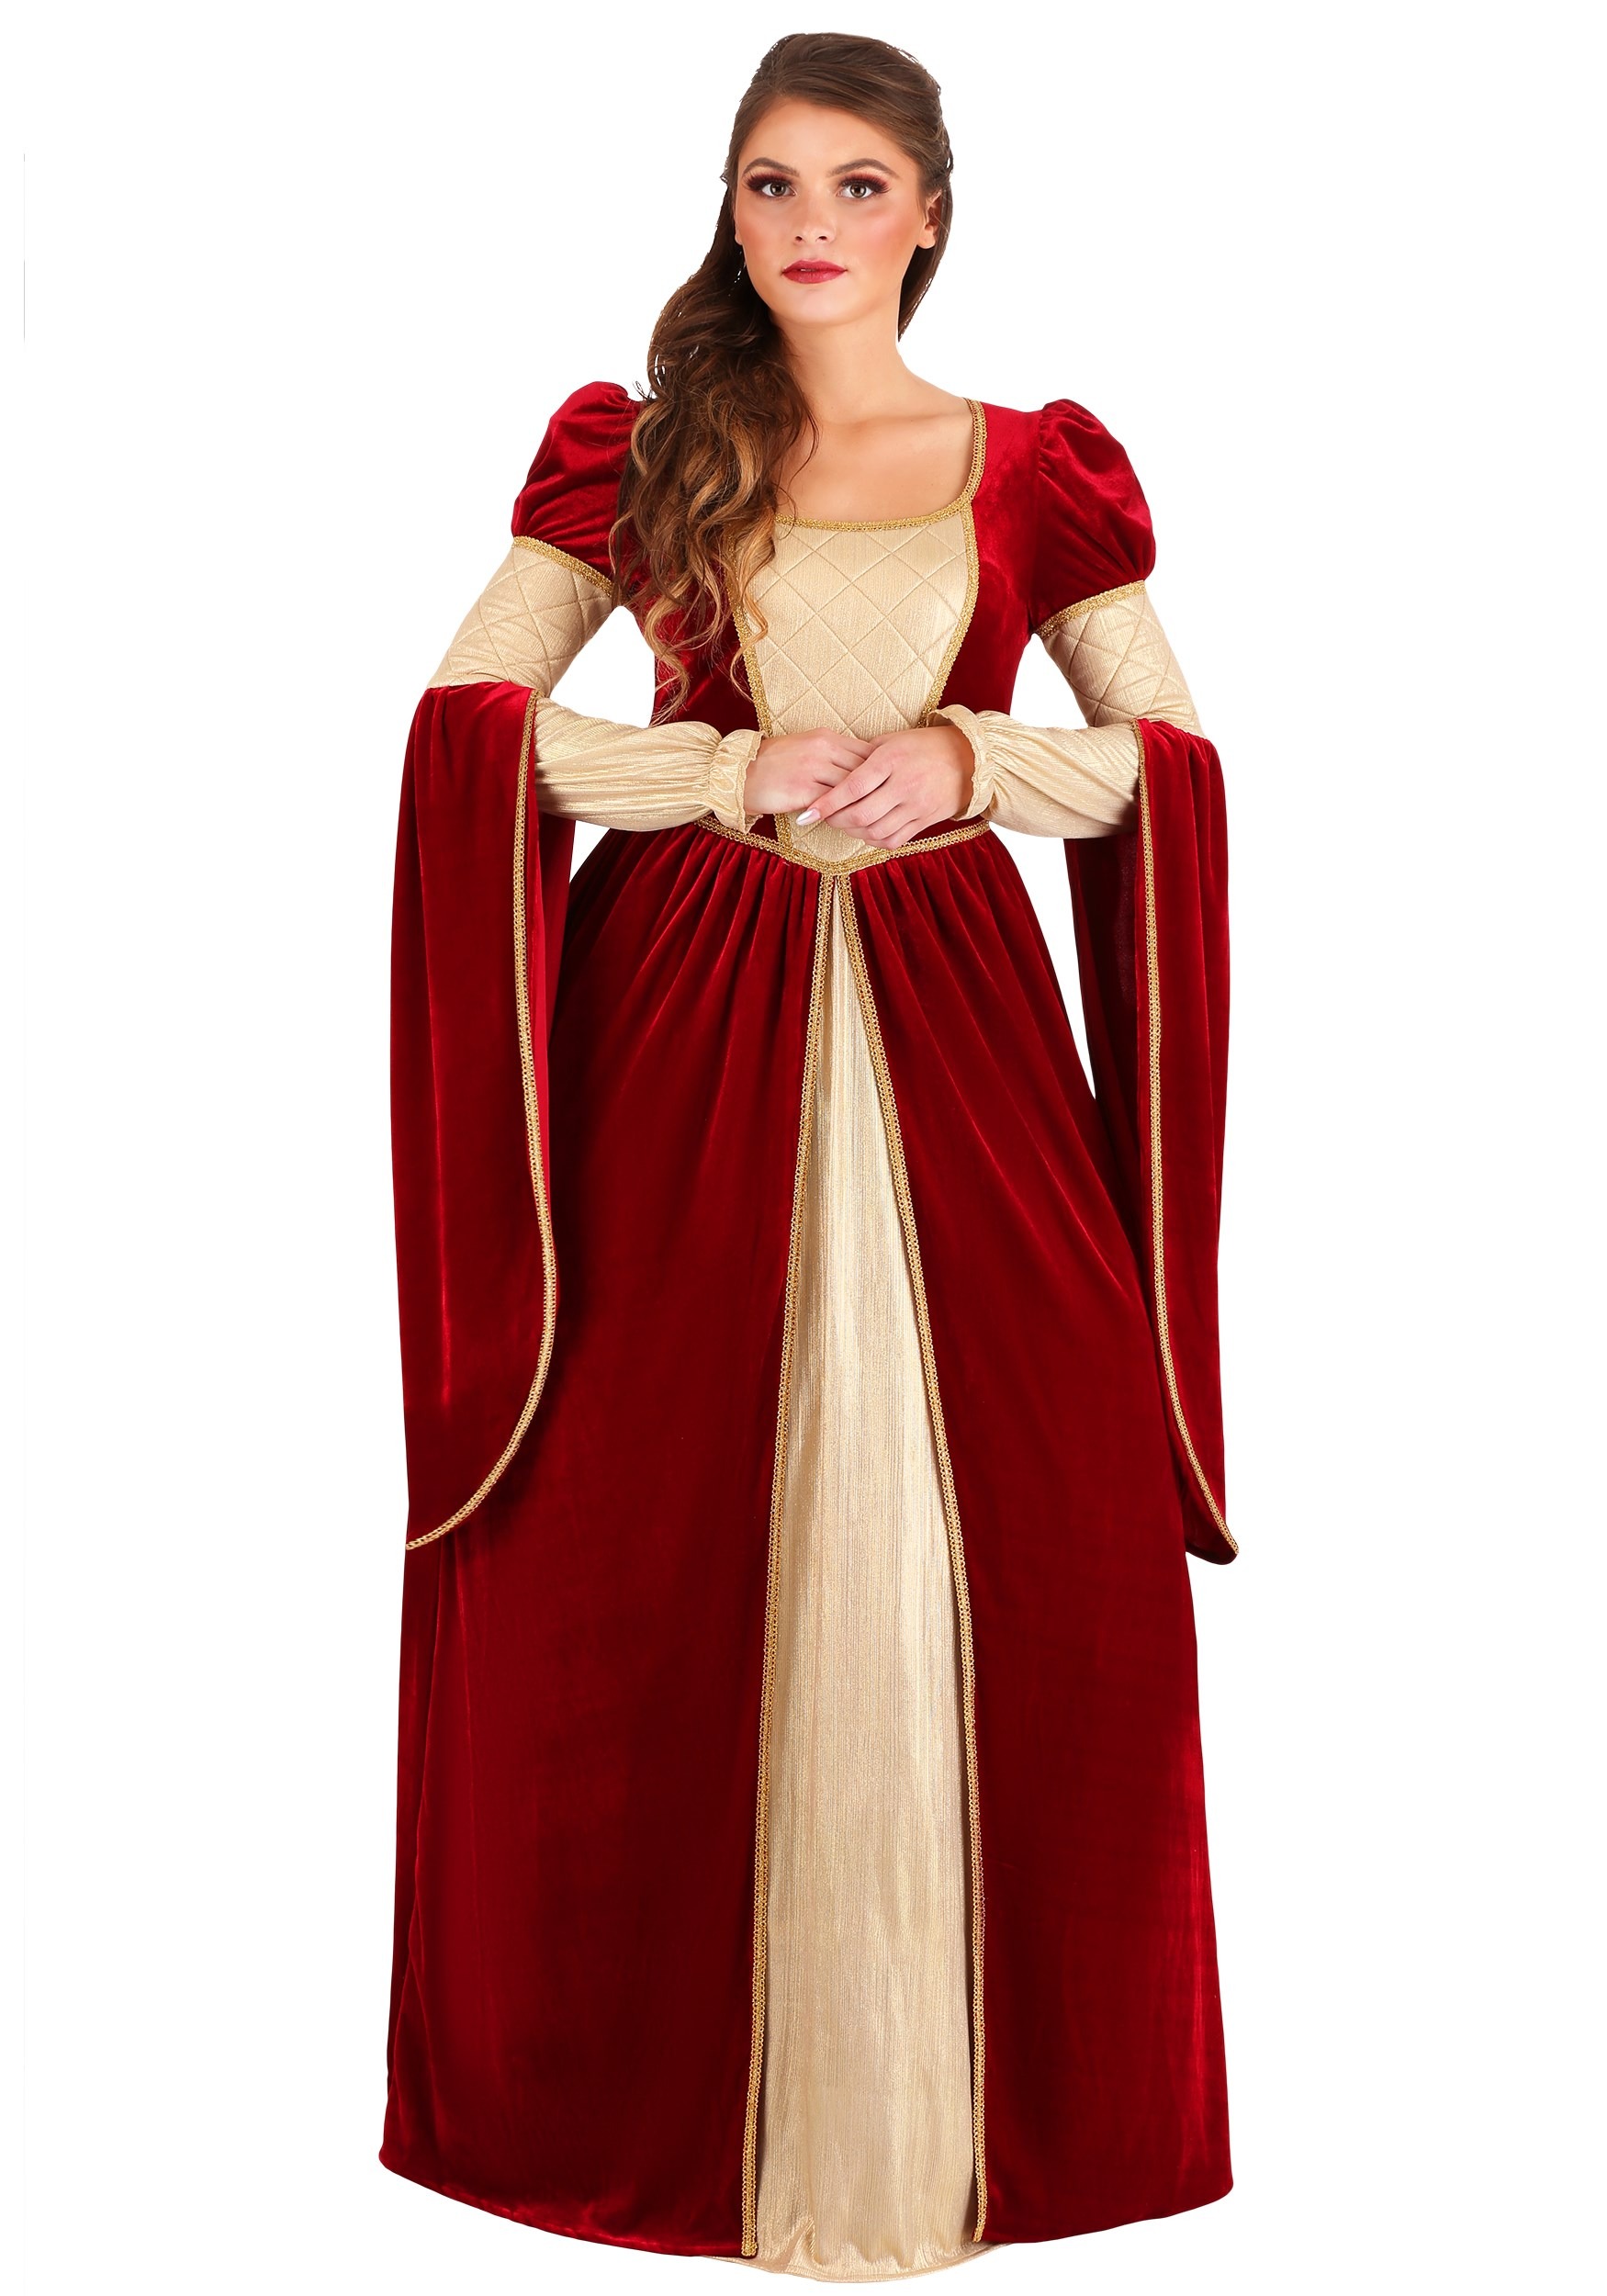 Regal Renaissance Queen Women's Fancy Dress Costume